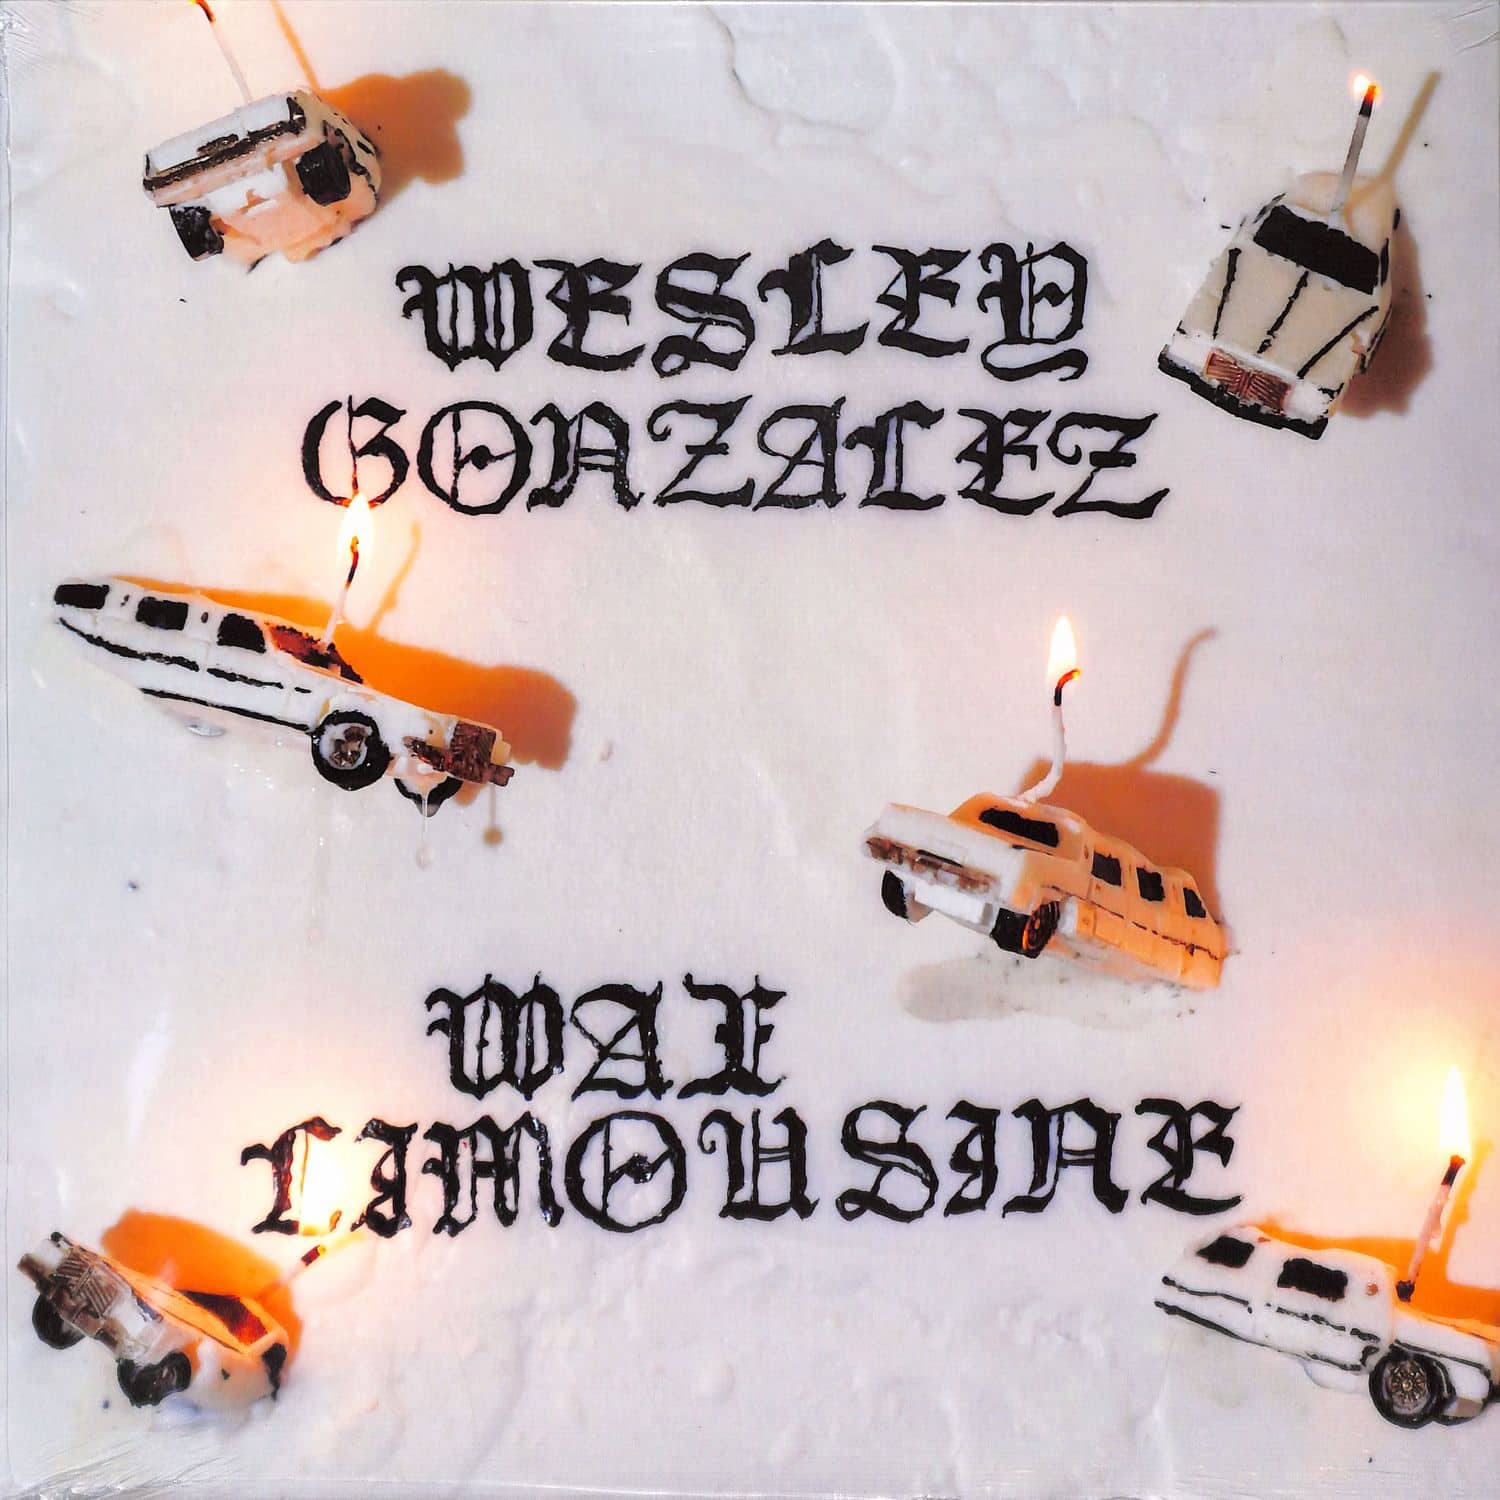 Wesley Gonzalez - WAX LIMOUSINE 